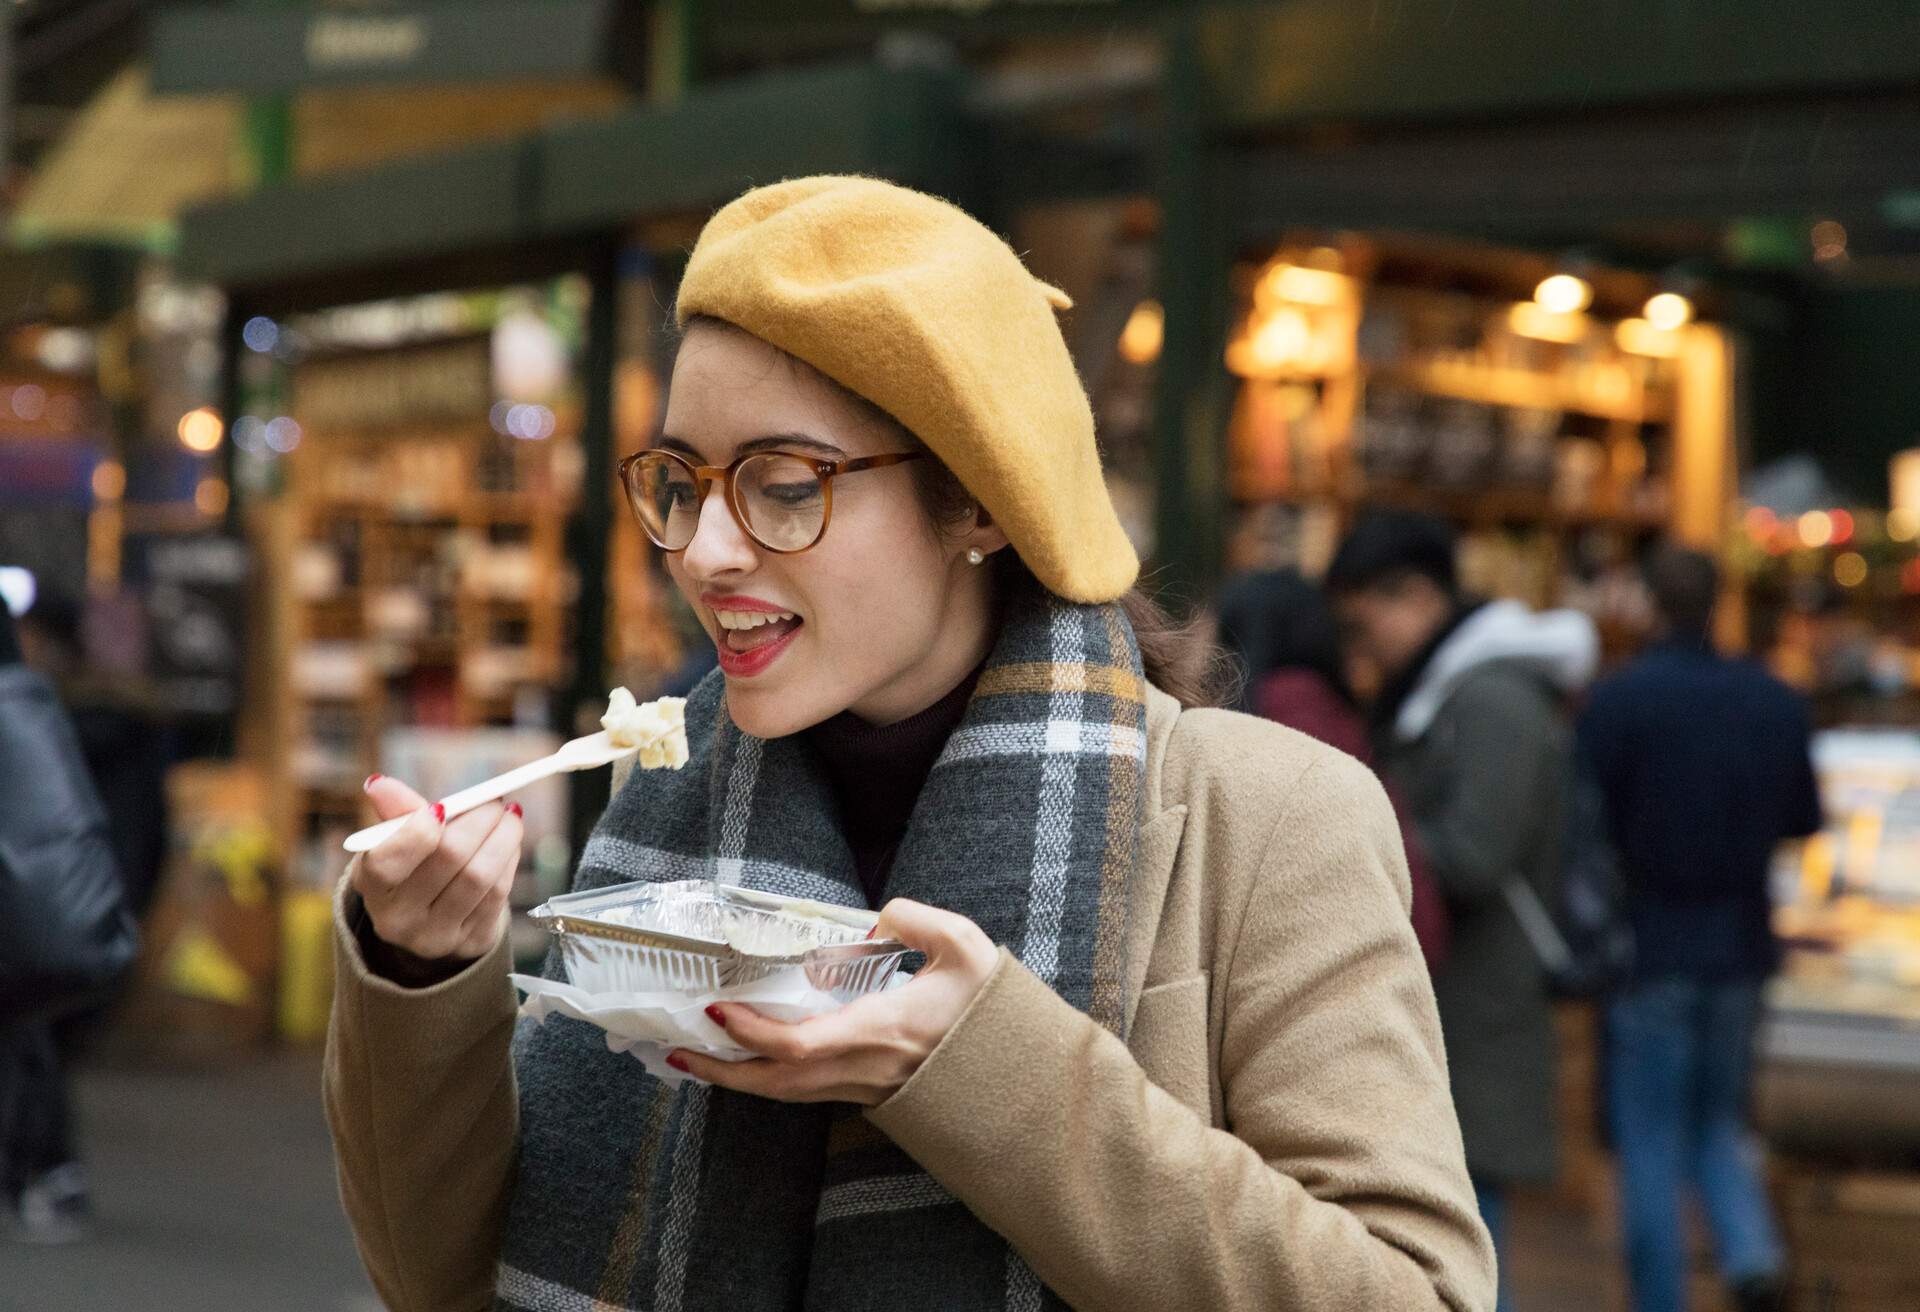 Woman eating street food in city